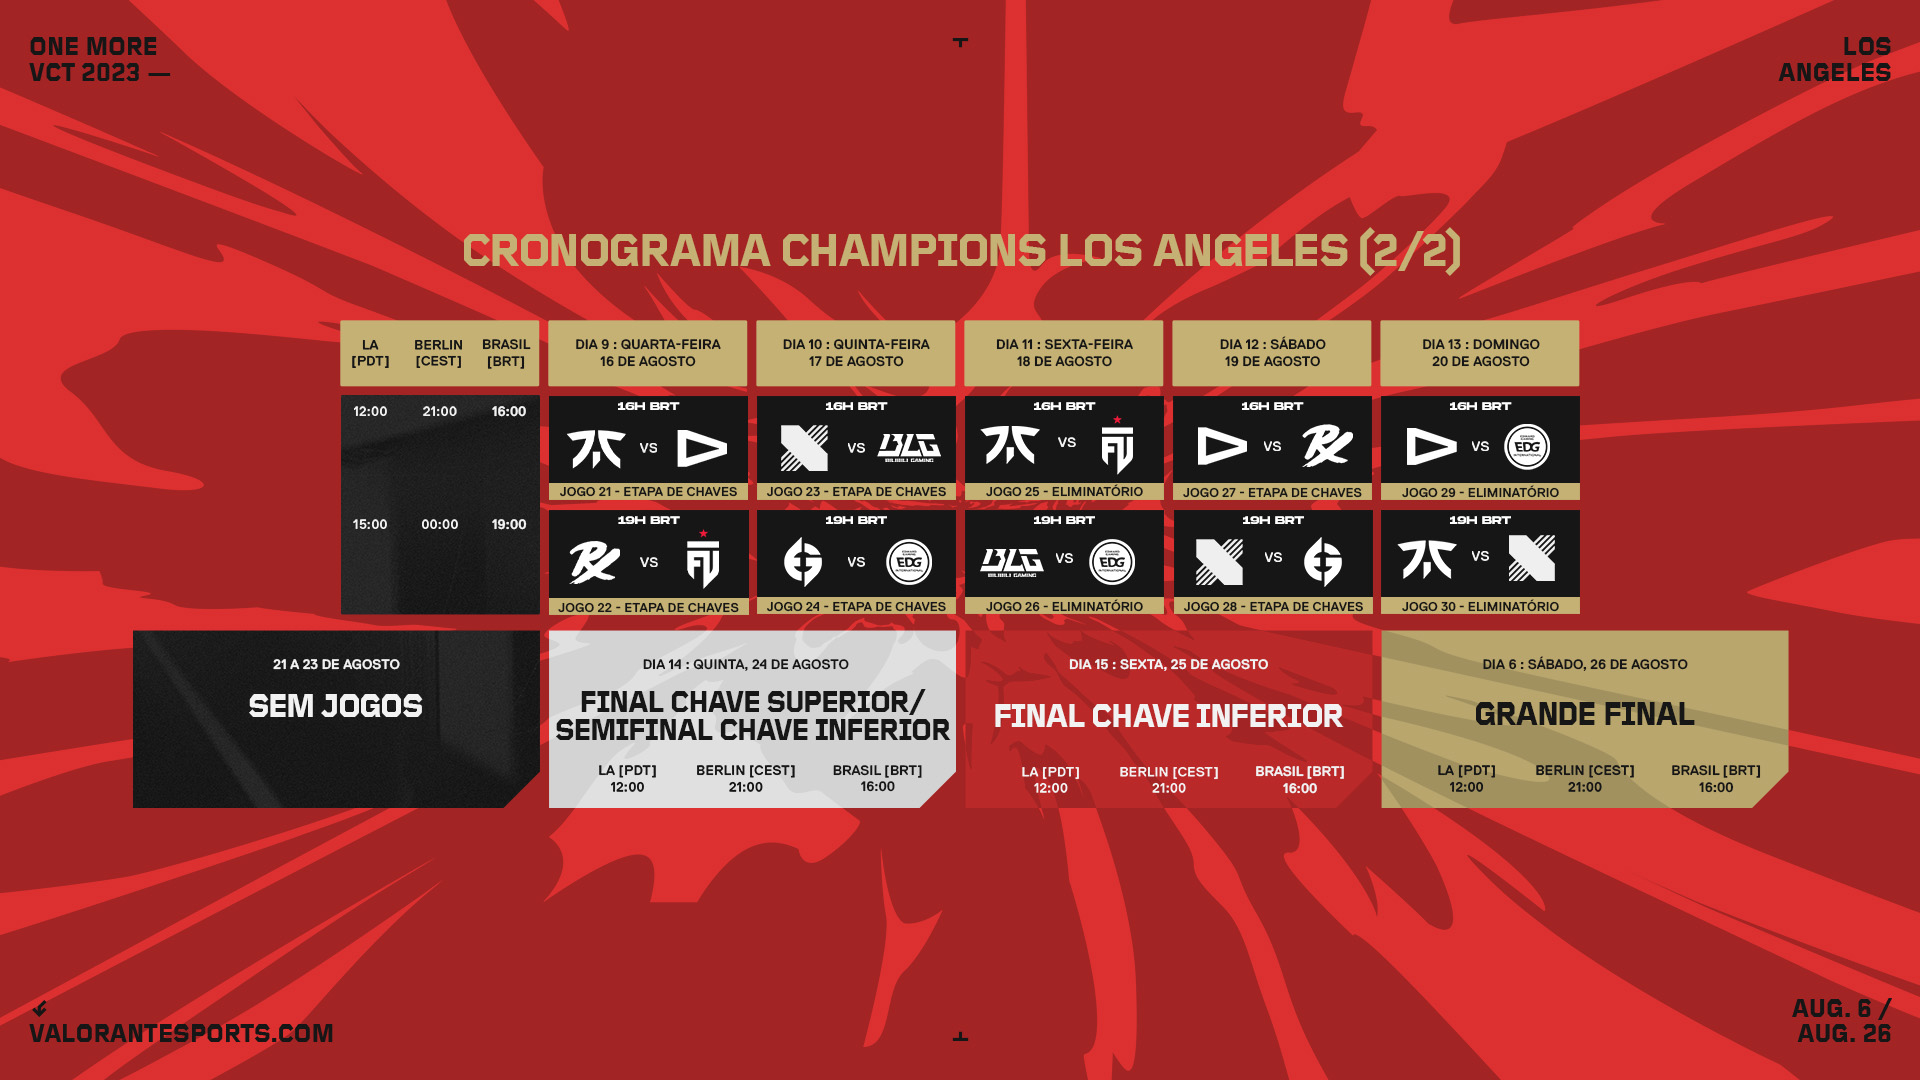 VALORANT Champions 2023 joga-se em Los Angeles